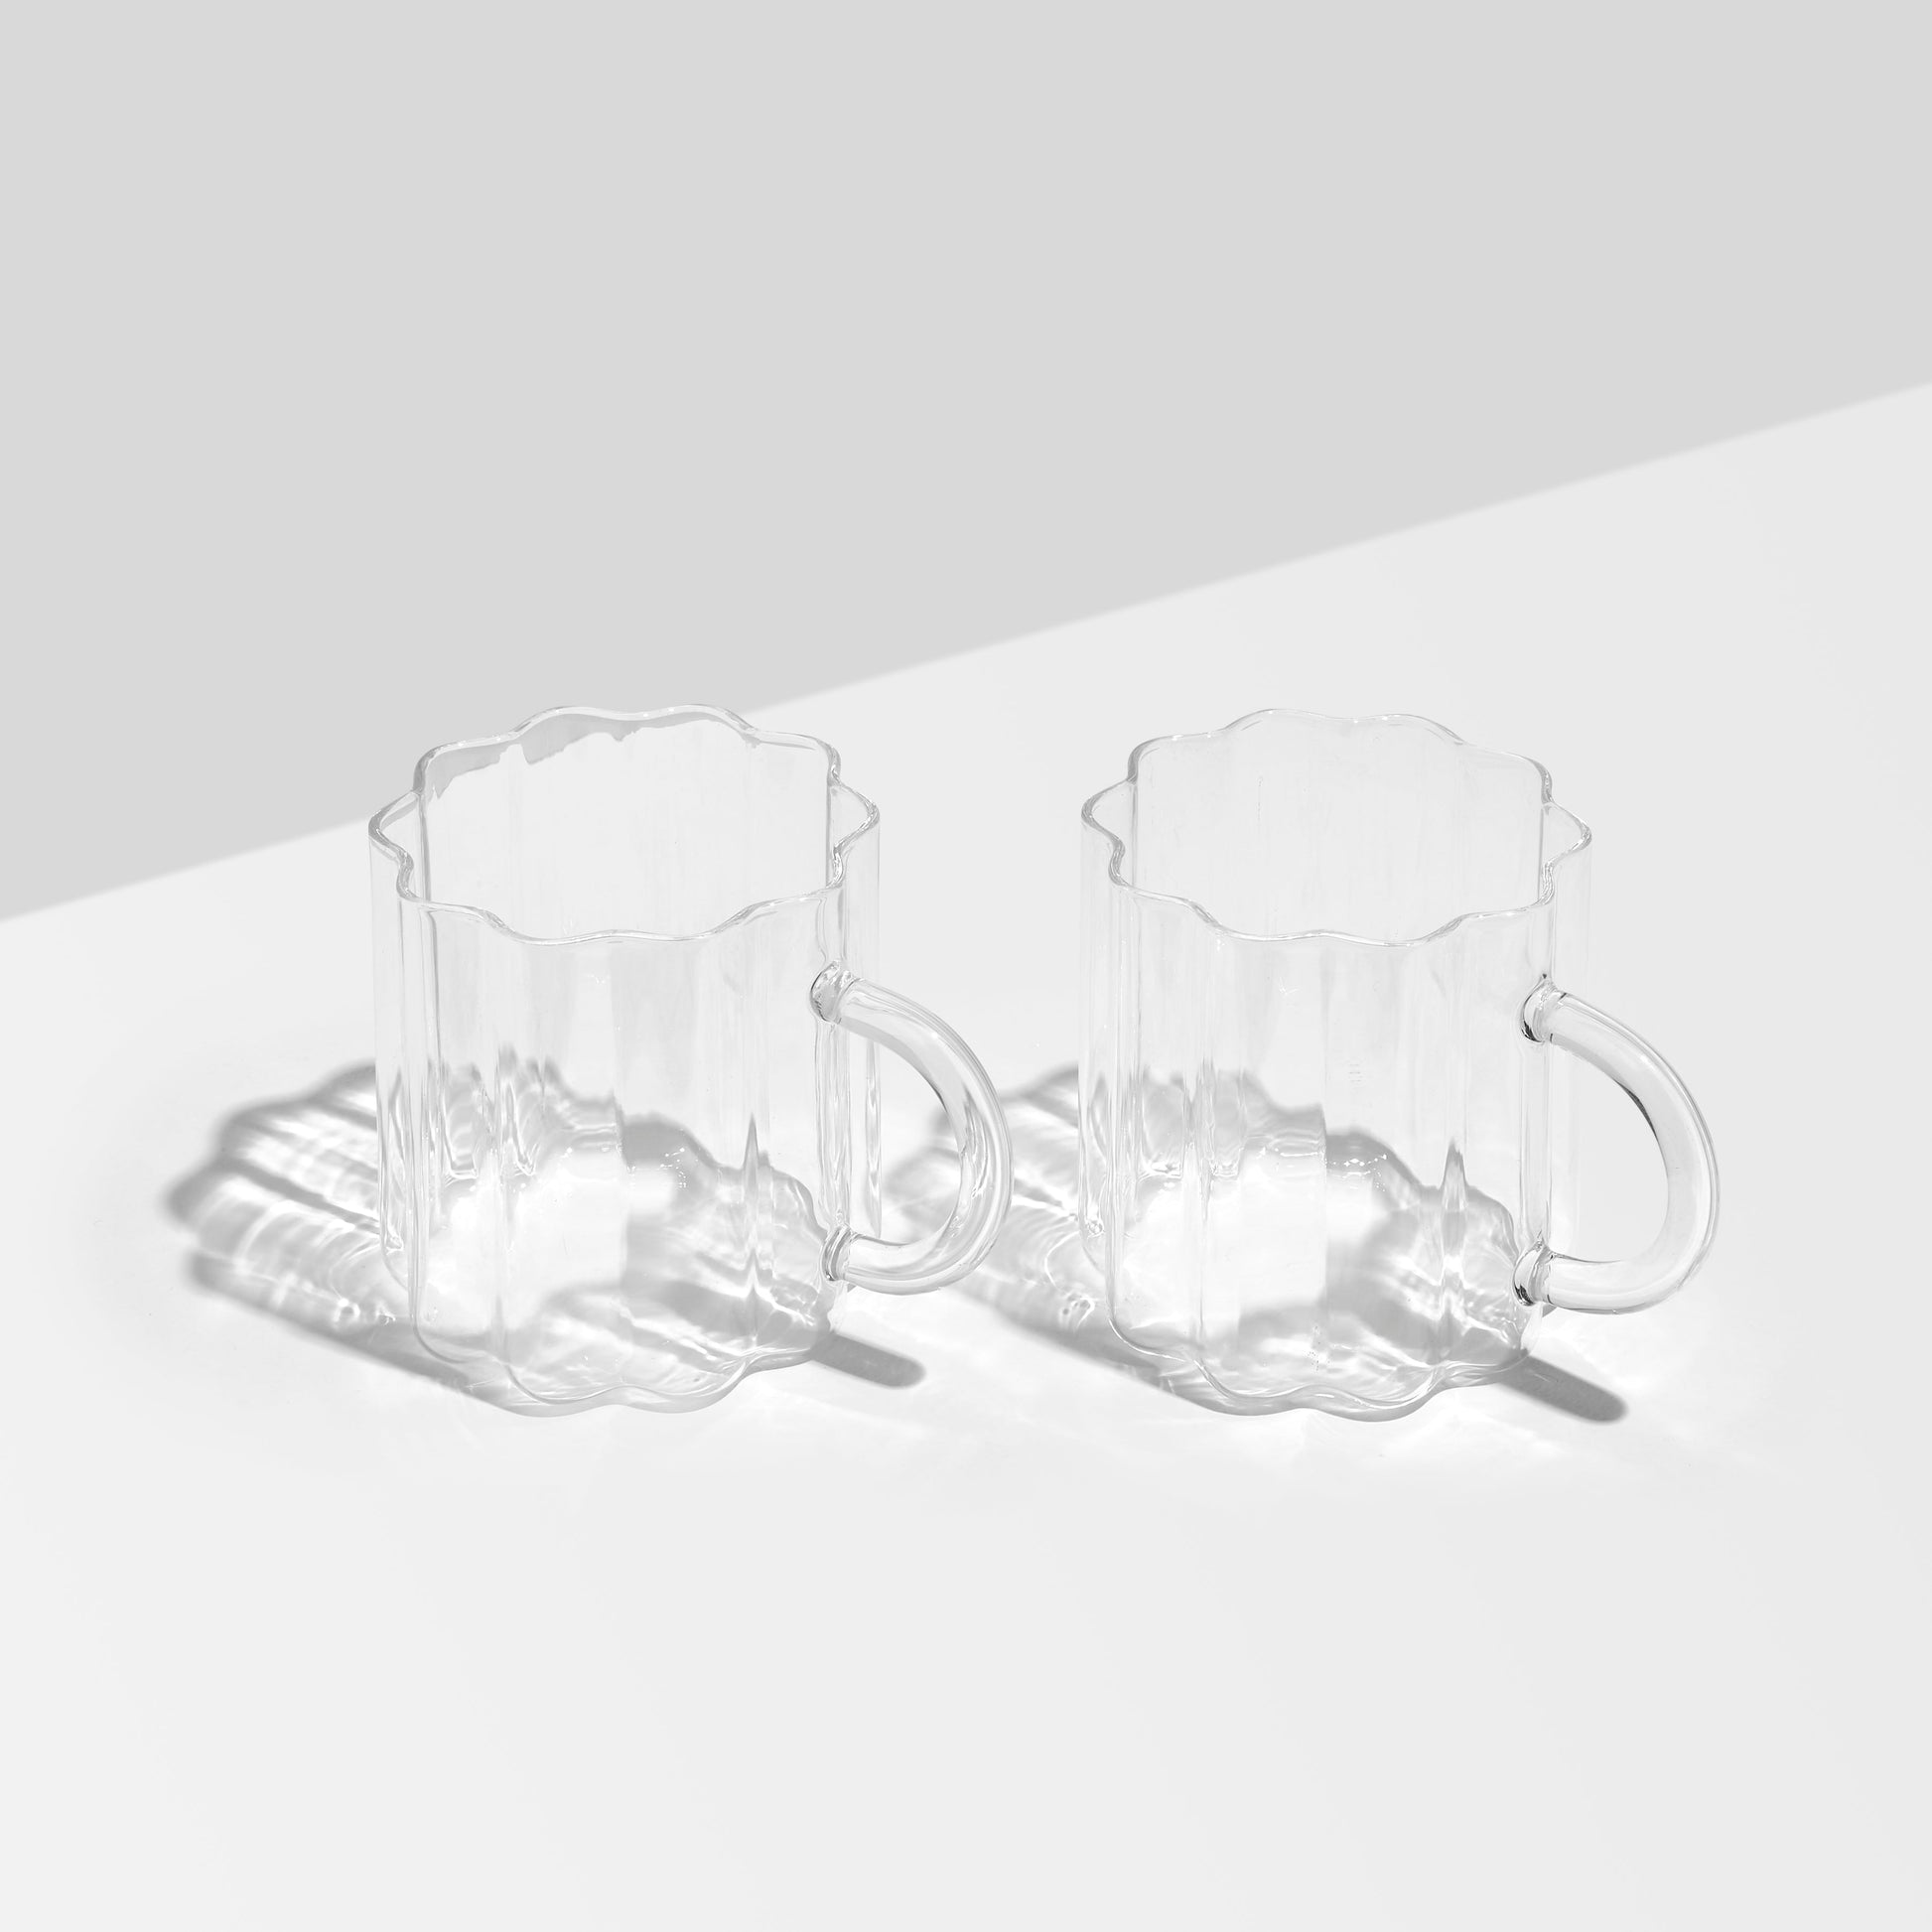 TWO x WAVE MUGS - CLEAR - Fazeek Drinkware Glasses